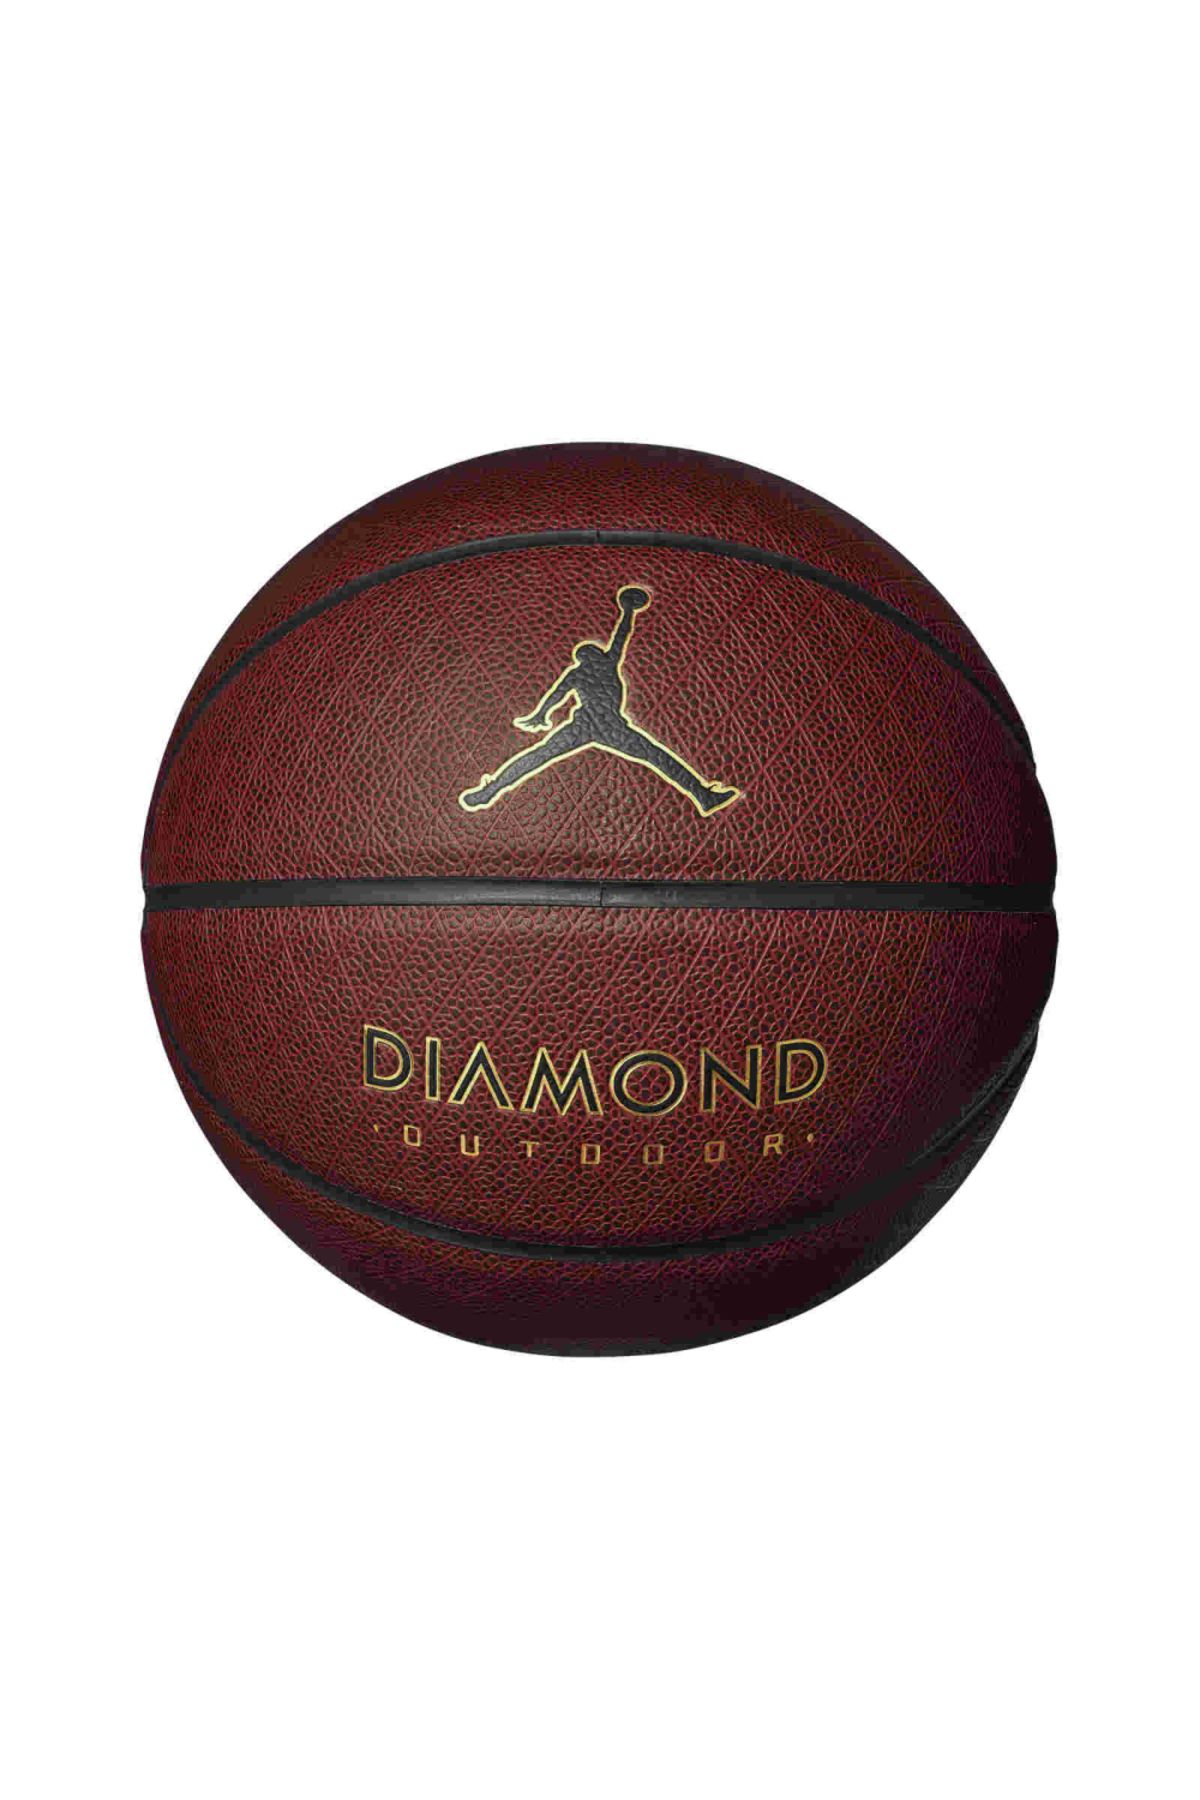 Nike JORDAN DIAMOND OUTDOOR 8P DEFLATED AMBER/BLACK/METALLIC GOLD BASKETBOL TOPU 7 NUMARA